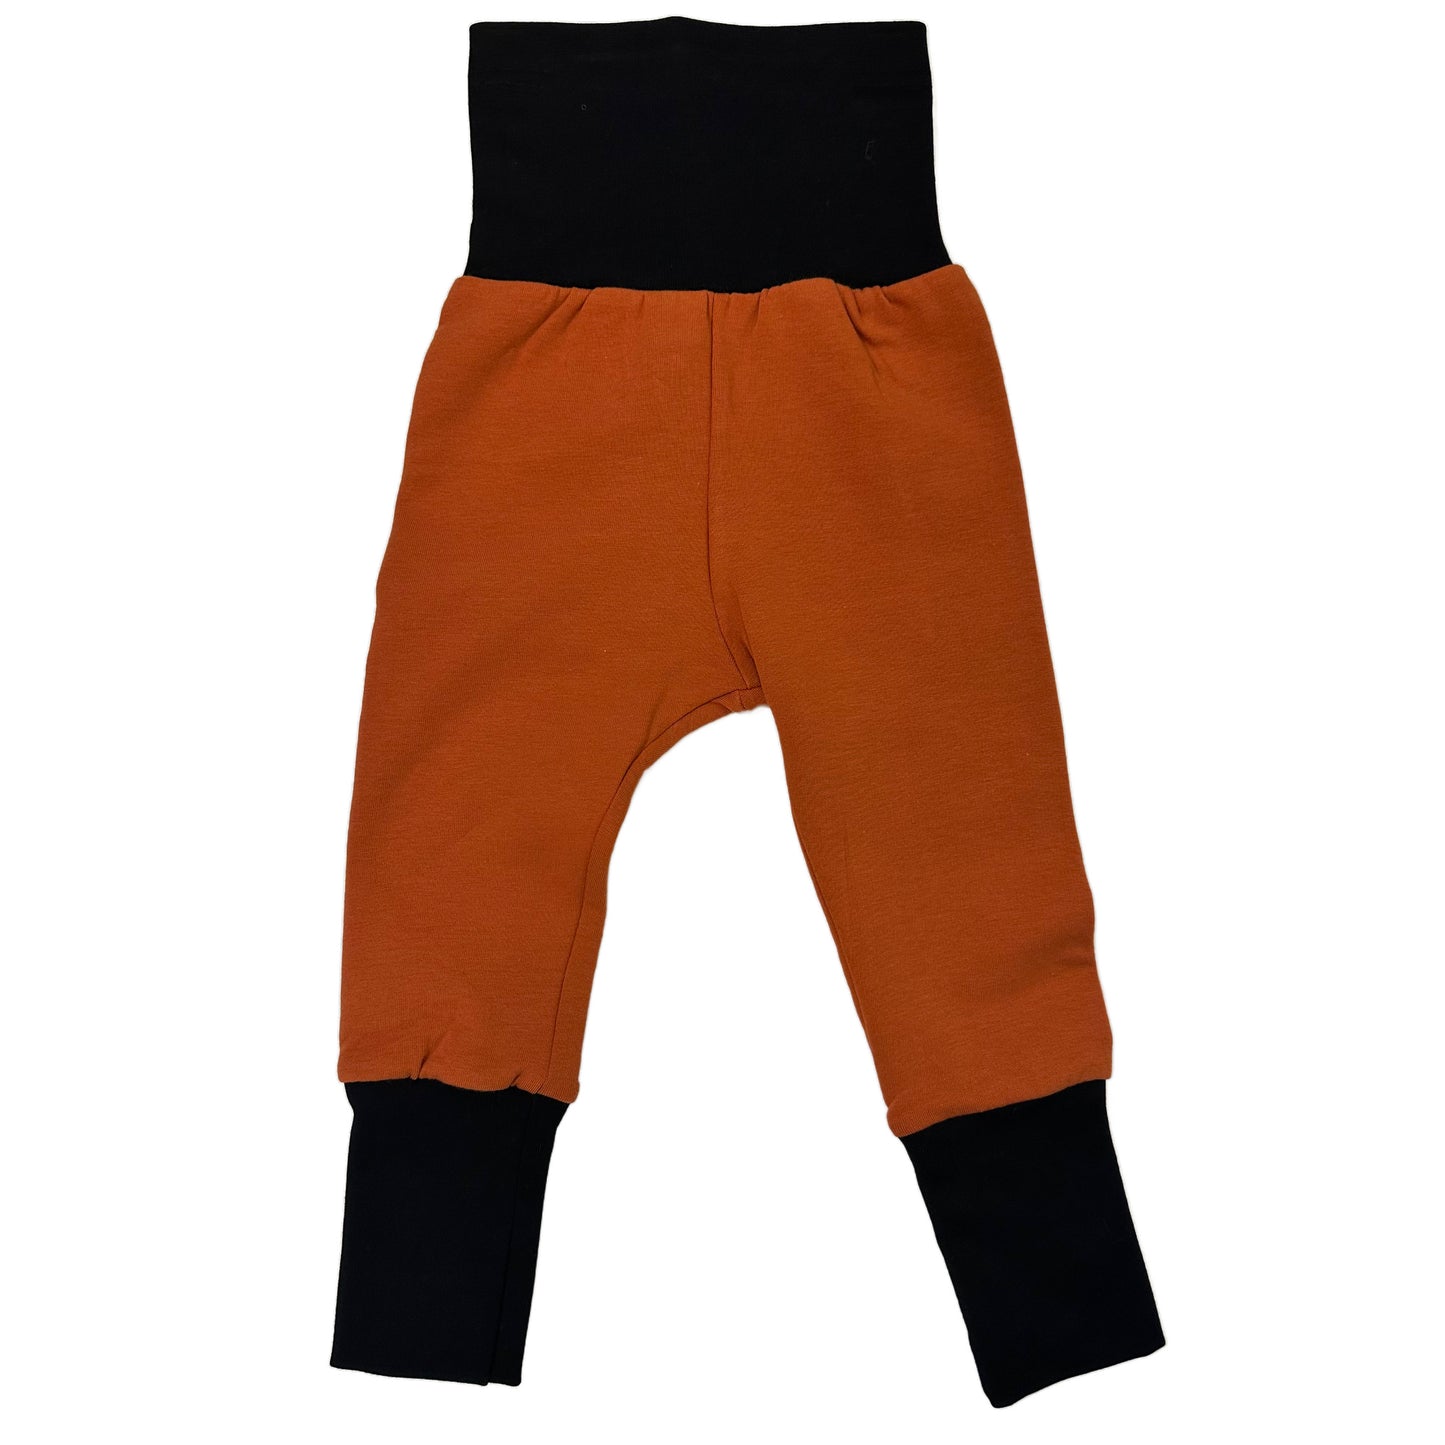 CLEARANCE Pantalones joggers Growth Spurt de color óxido y negro